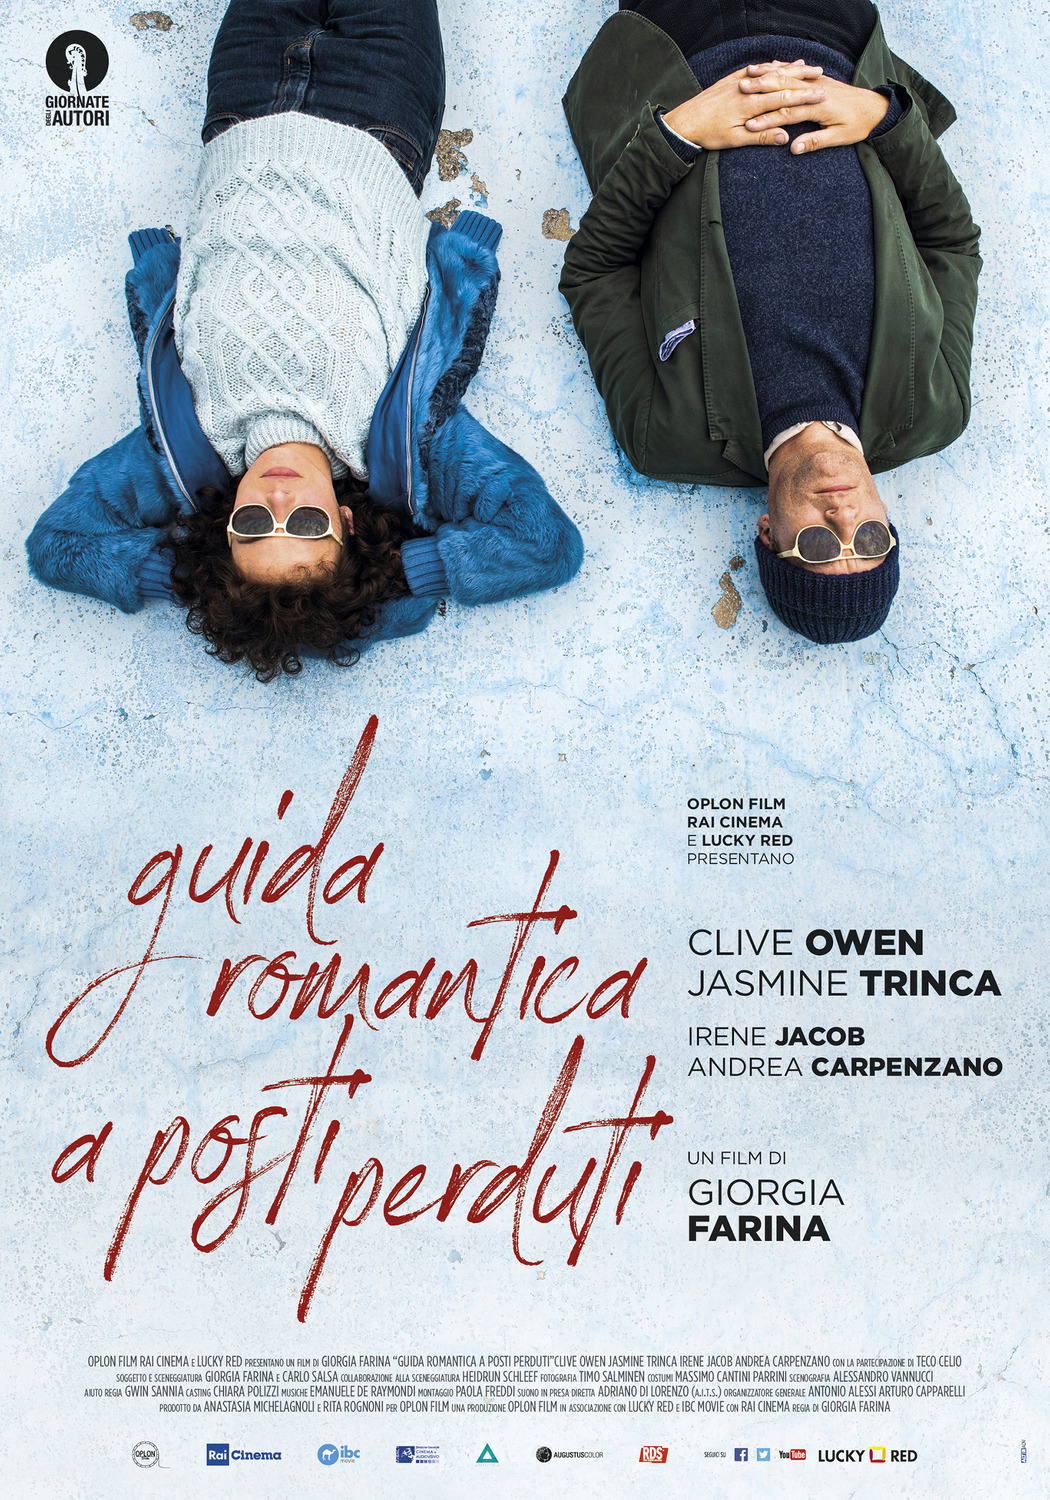 Extra Large Movie Poster Image for Guida romantica a posti perduti 